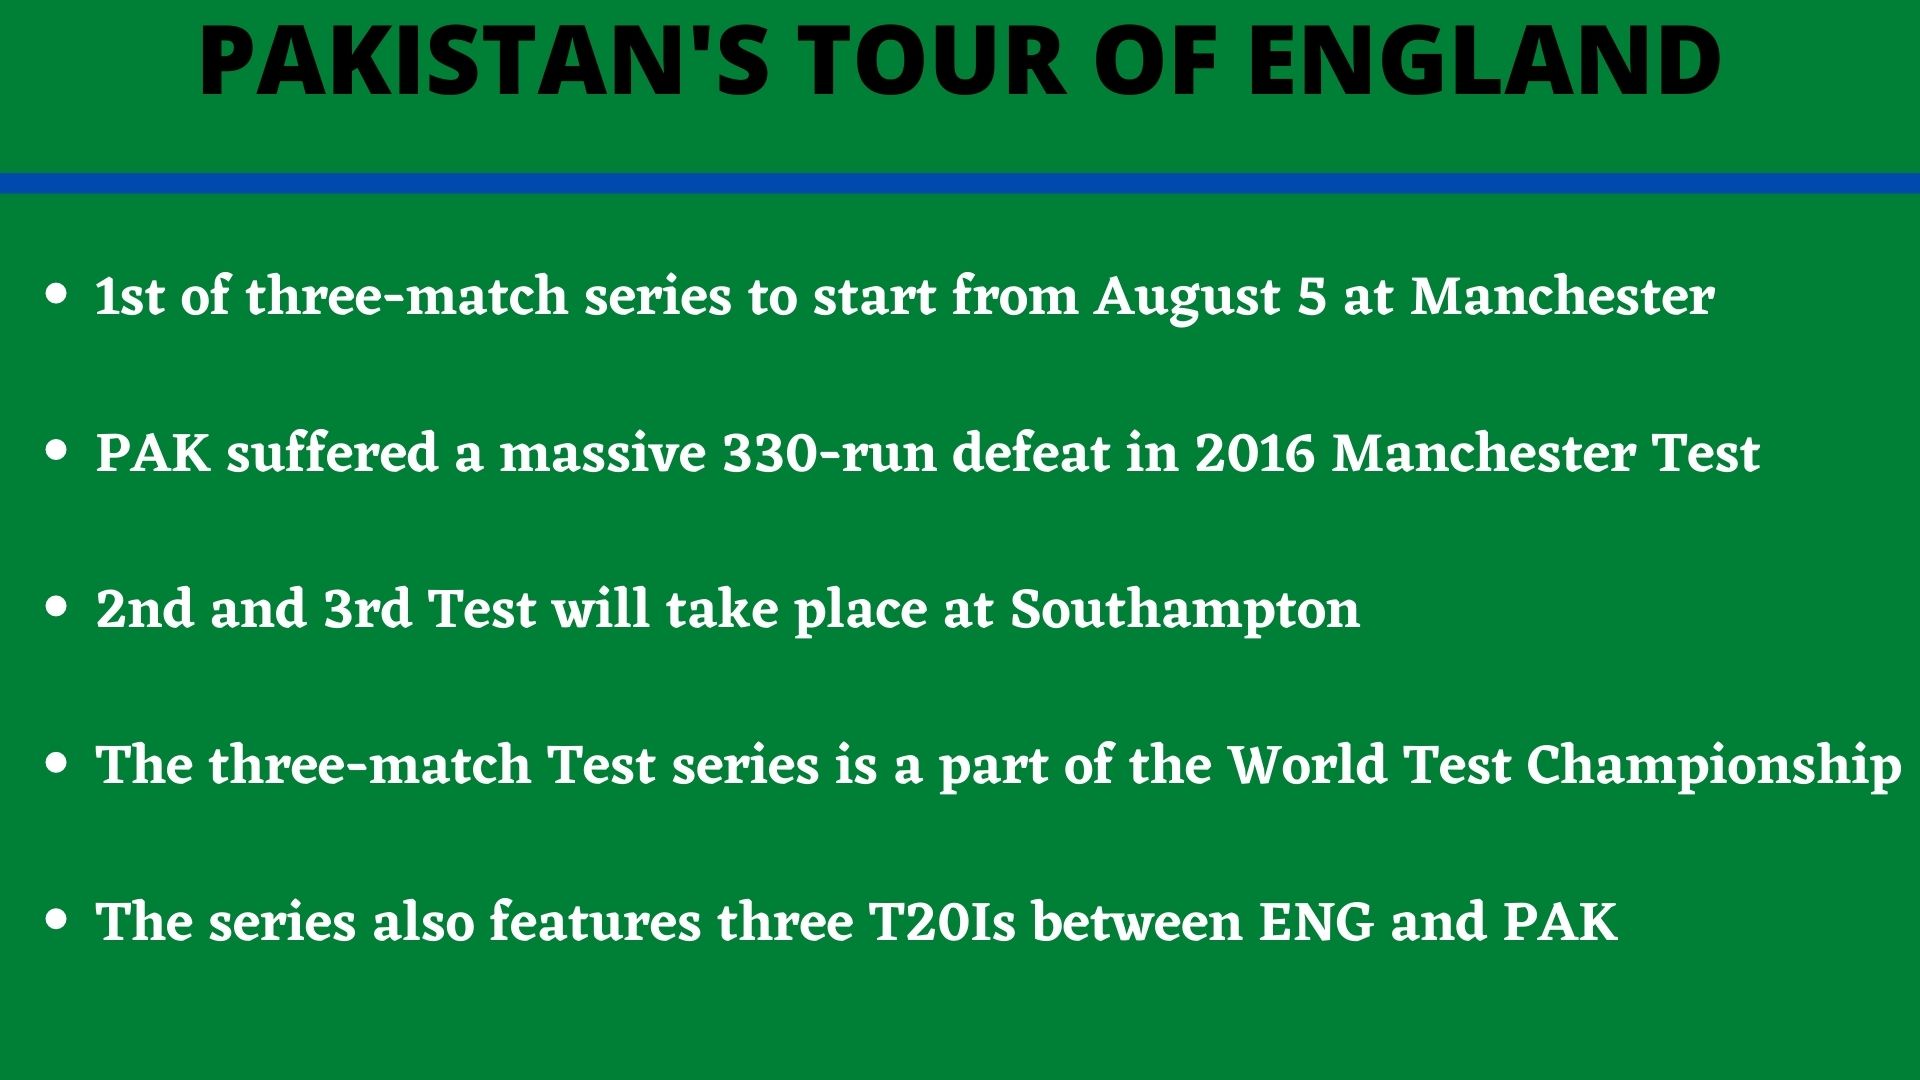 ENG VS PAK, England, Pakistan, test